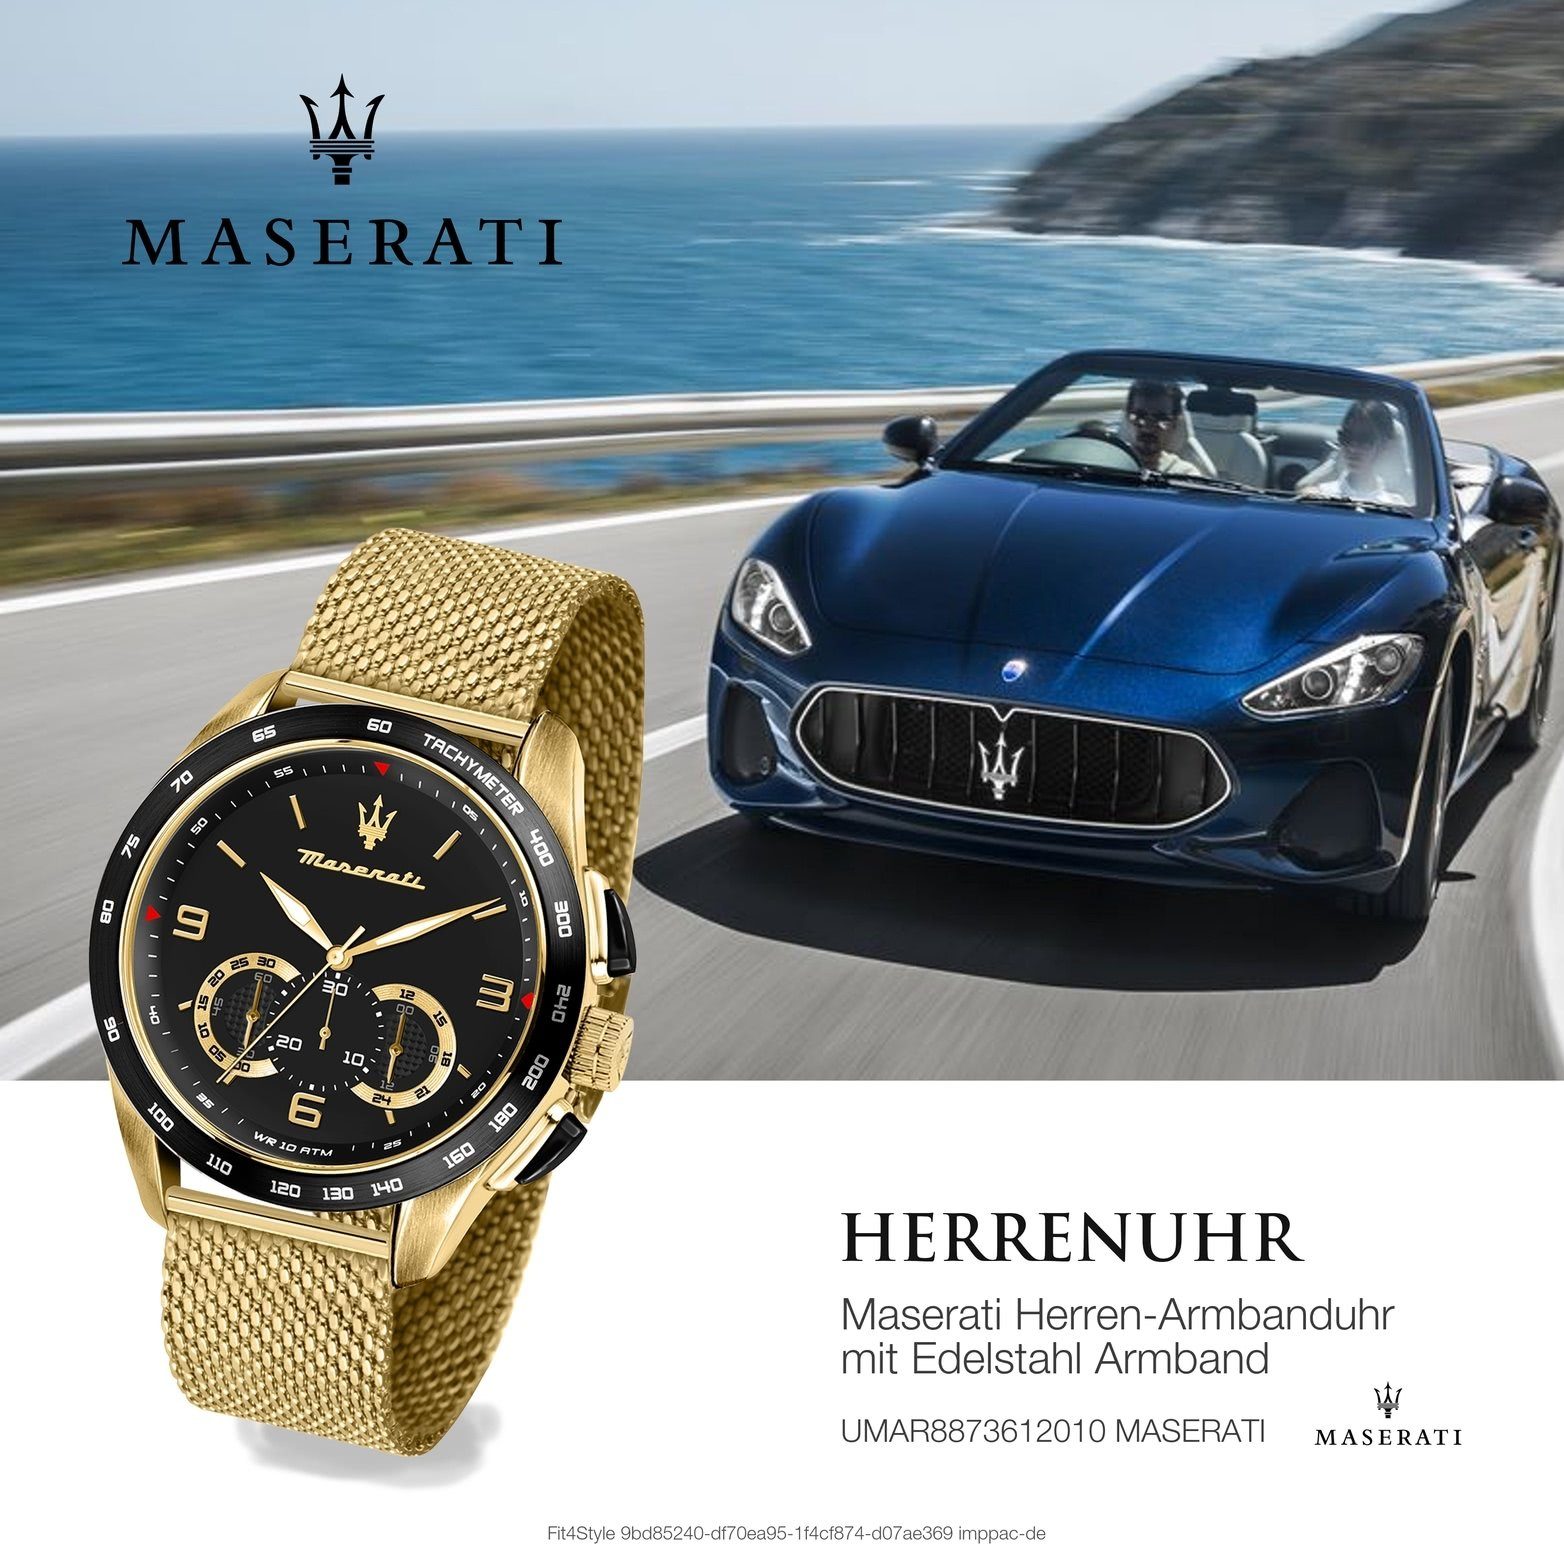 MASERATI Chronograph Maserati Edelstahl Armband-Uhr, Herrenuhr Edelstahlarmband, rundes 55x45mm) (ca. groß schwarz Gehäuse